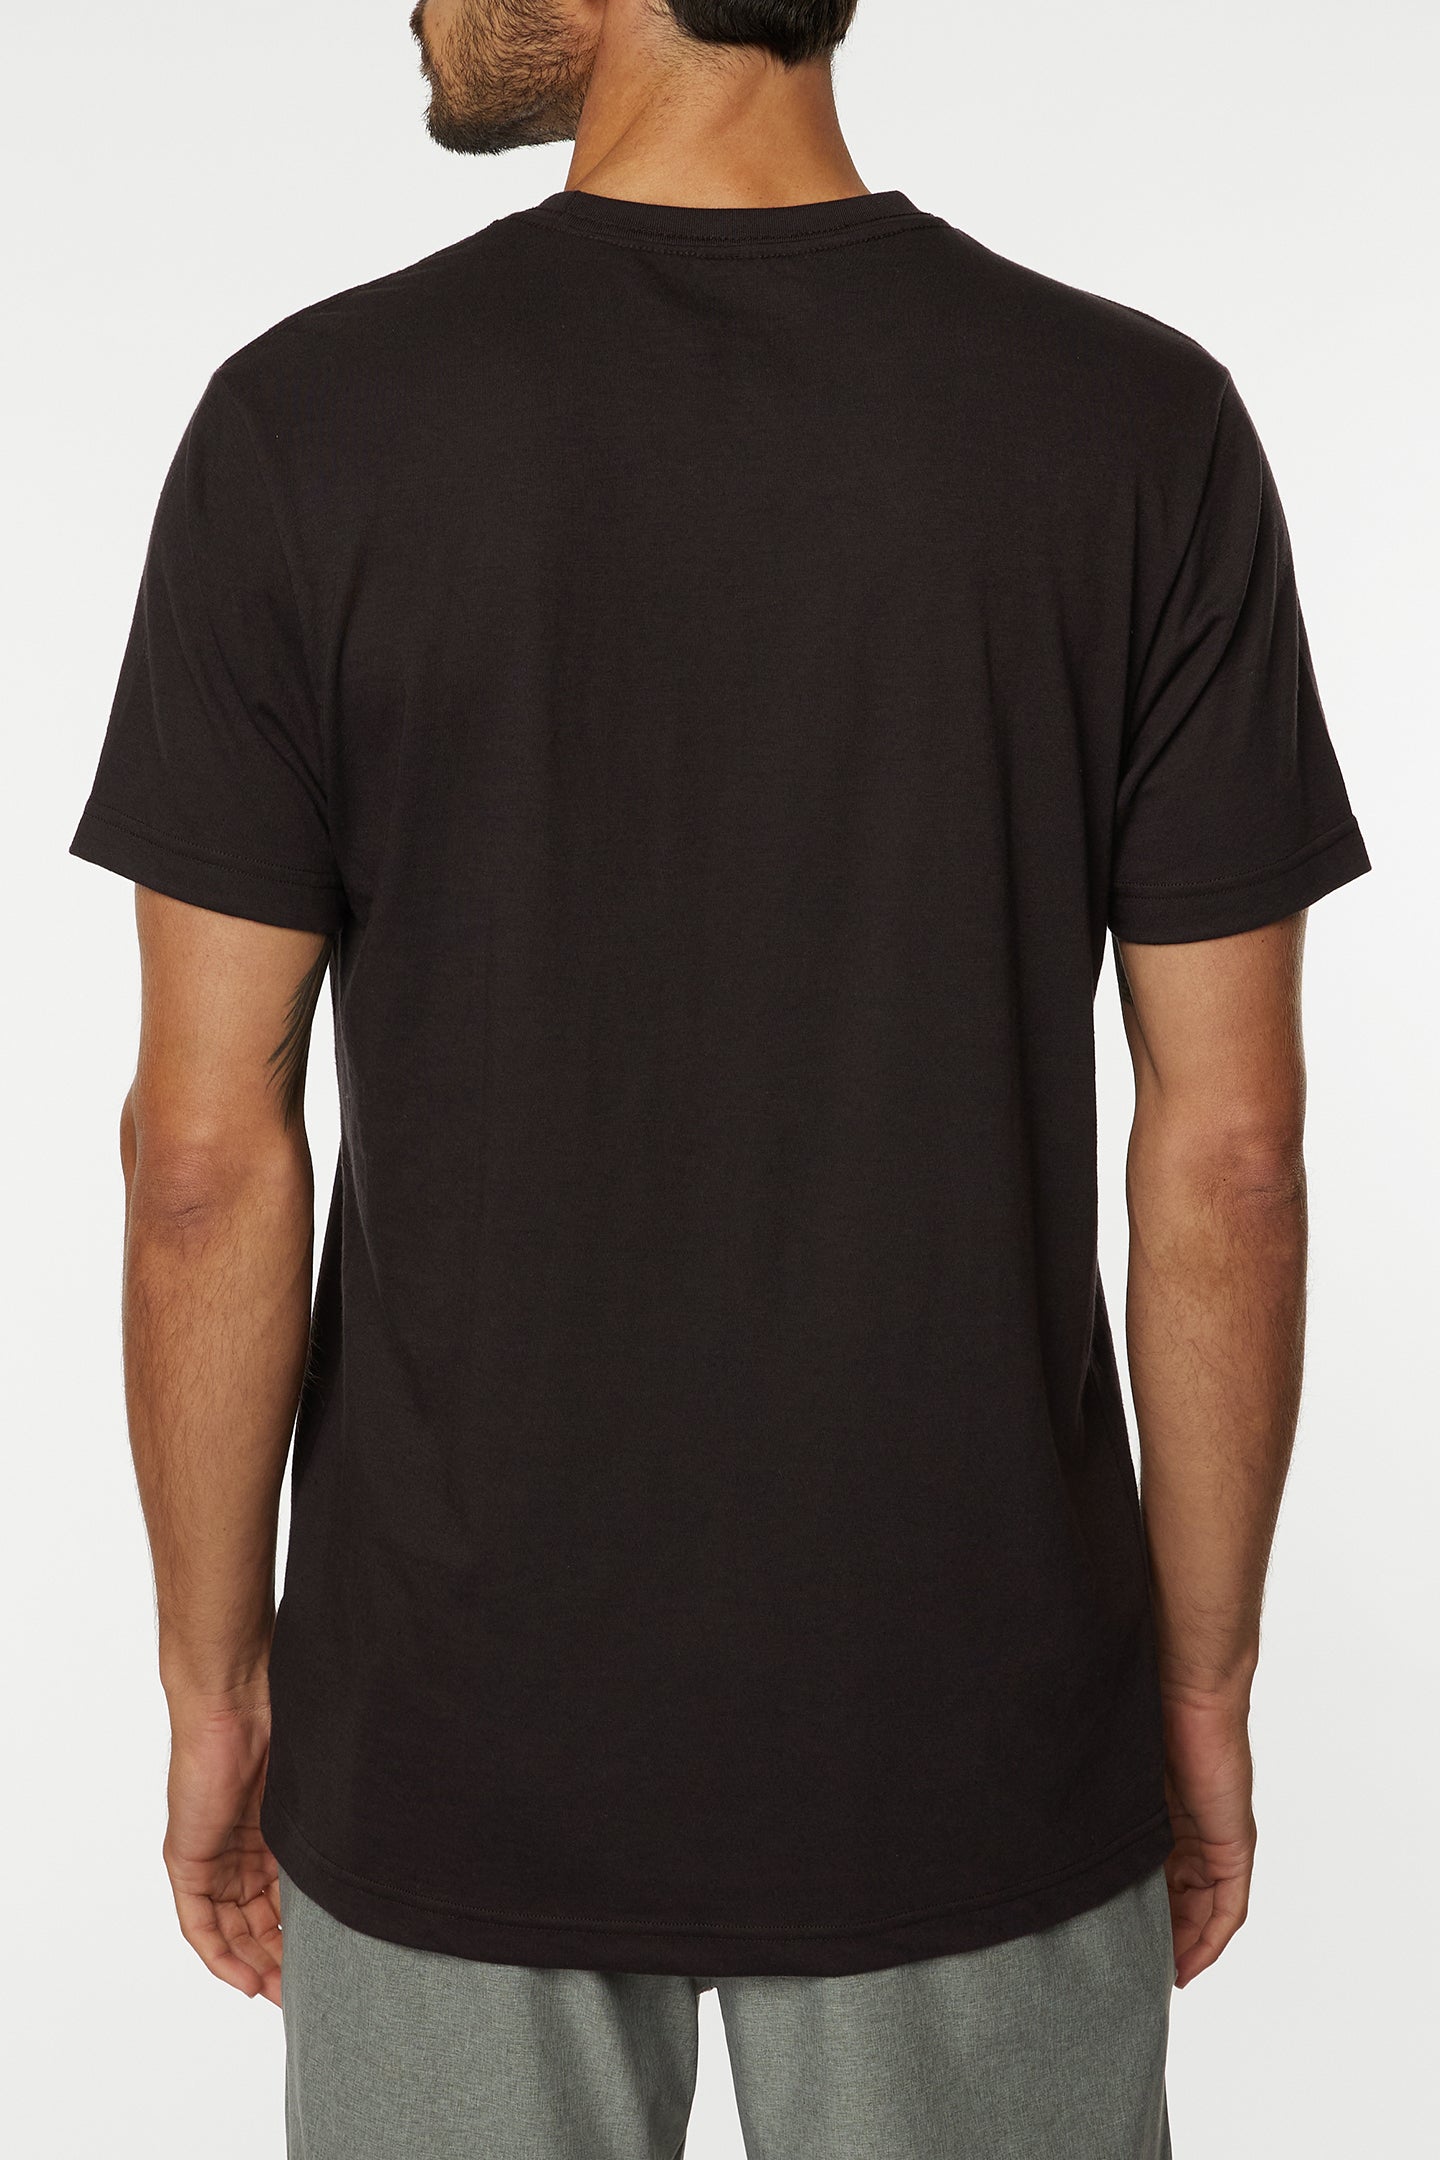 TRVLR Cossa Staple T-Shirt - Black